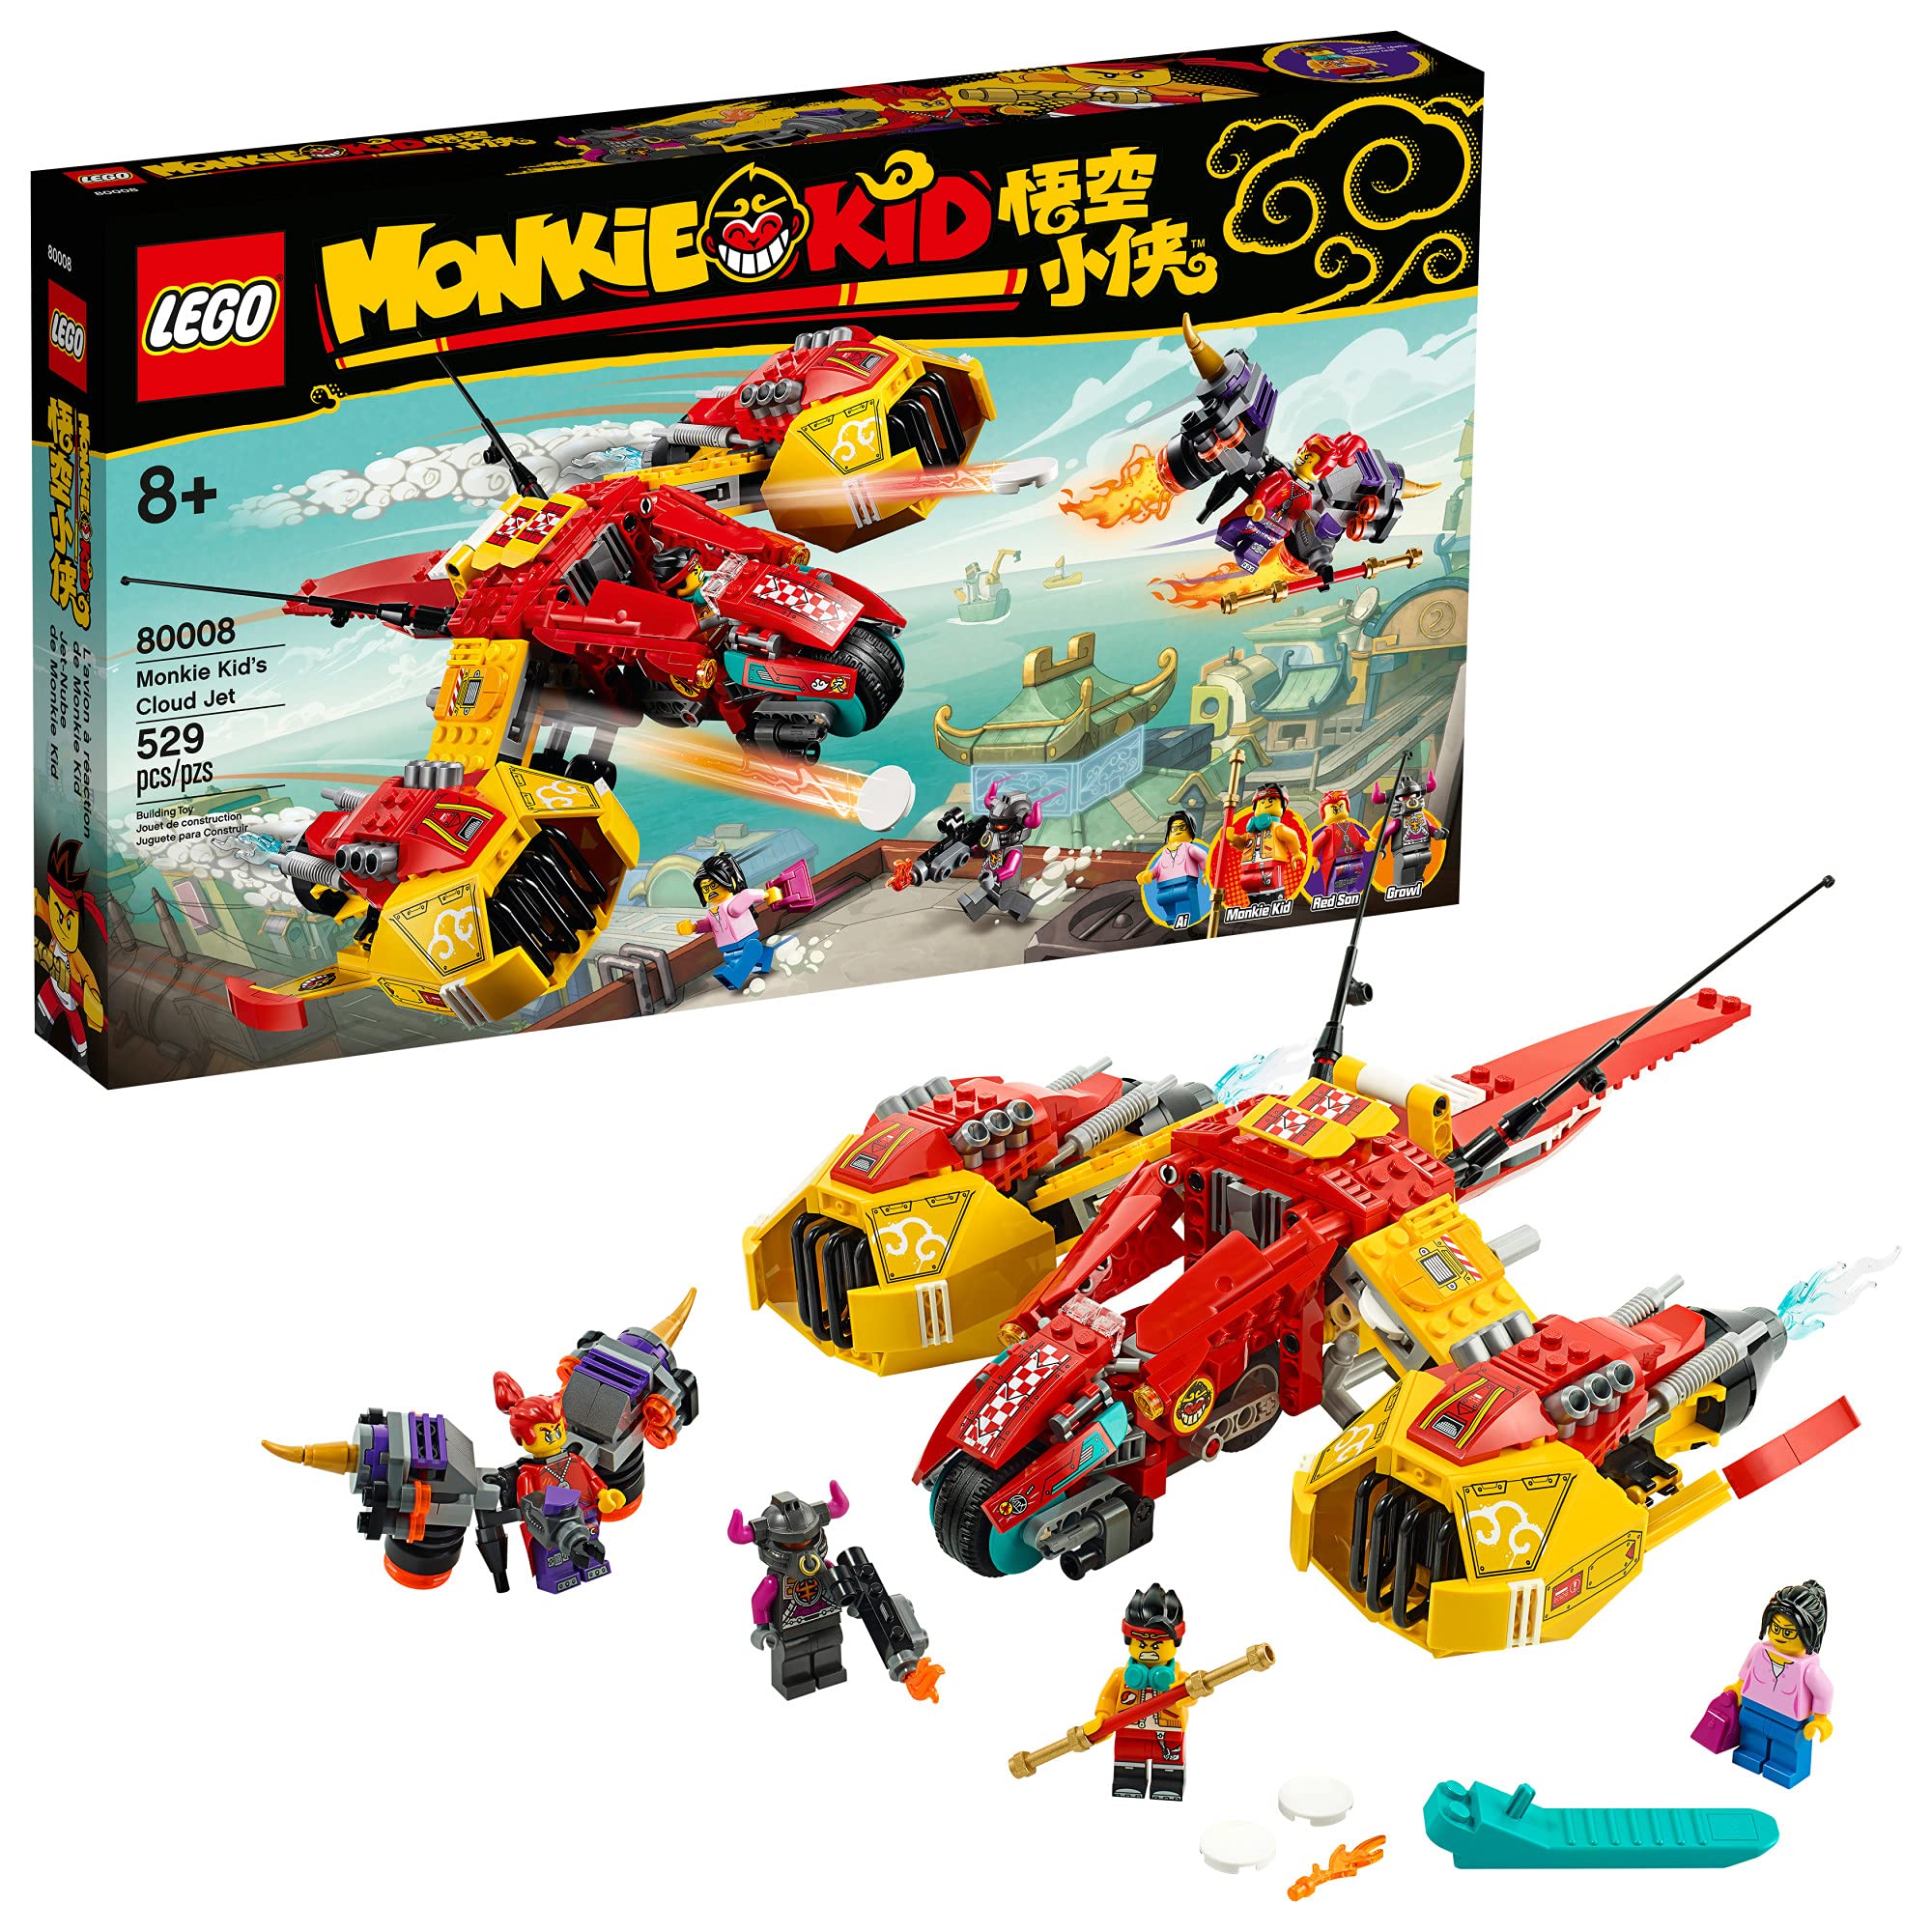 $41.99: LEGO Monkie Kid: Monkie Kid’s Cloud Jet 80008 Aircraft Toy Building Kit (529 Pieces) Amazon Exclusive